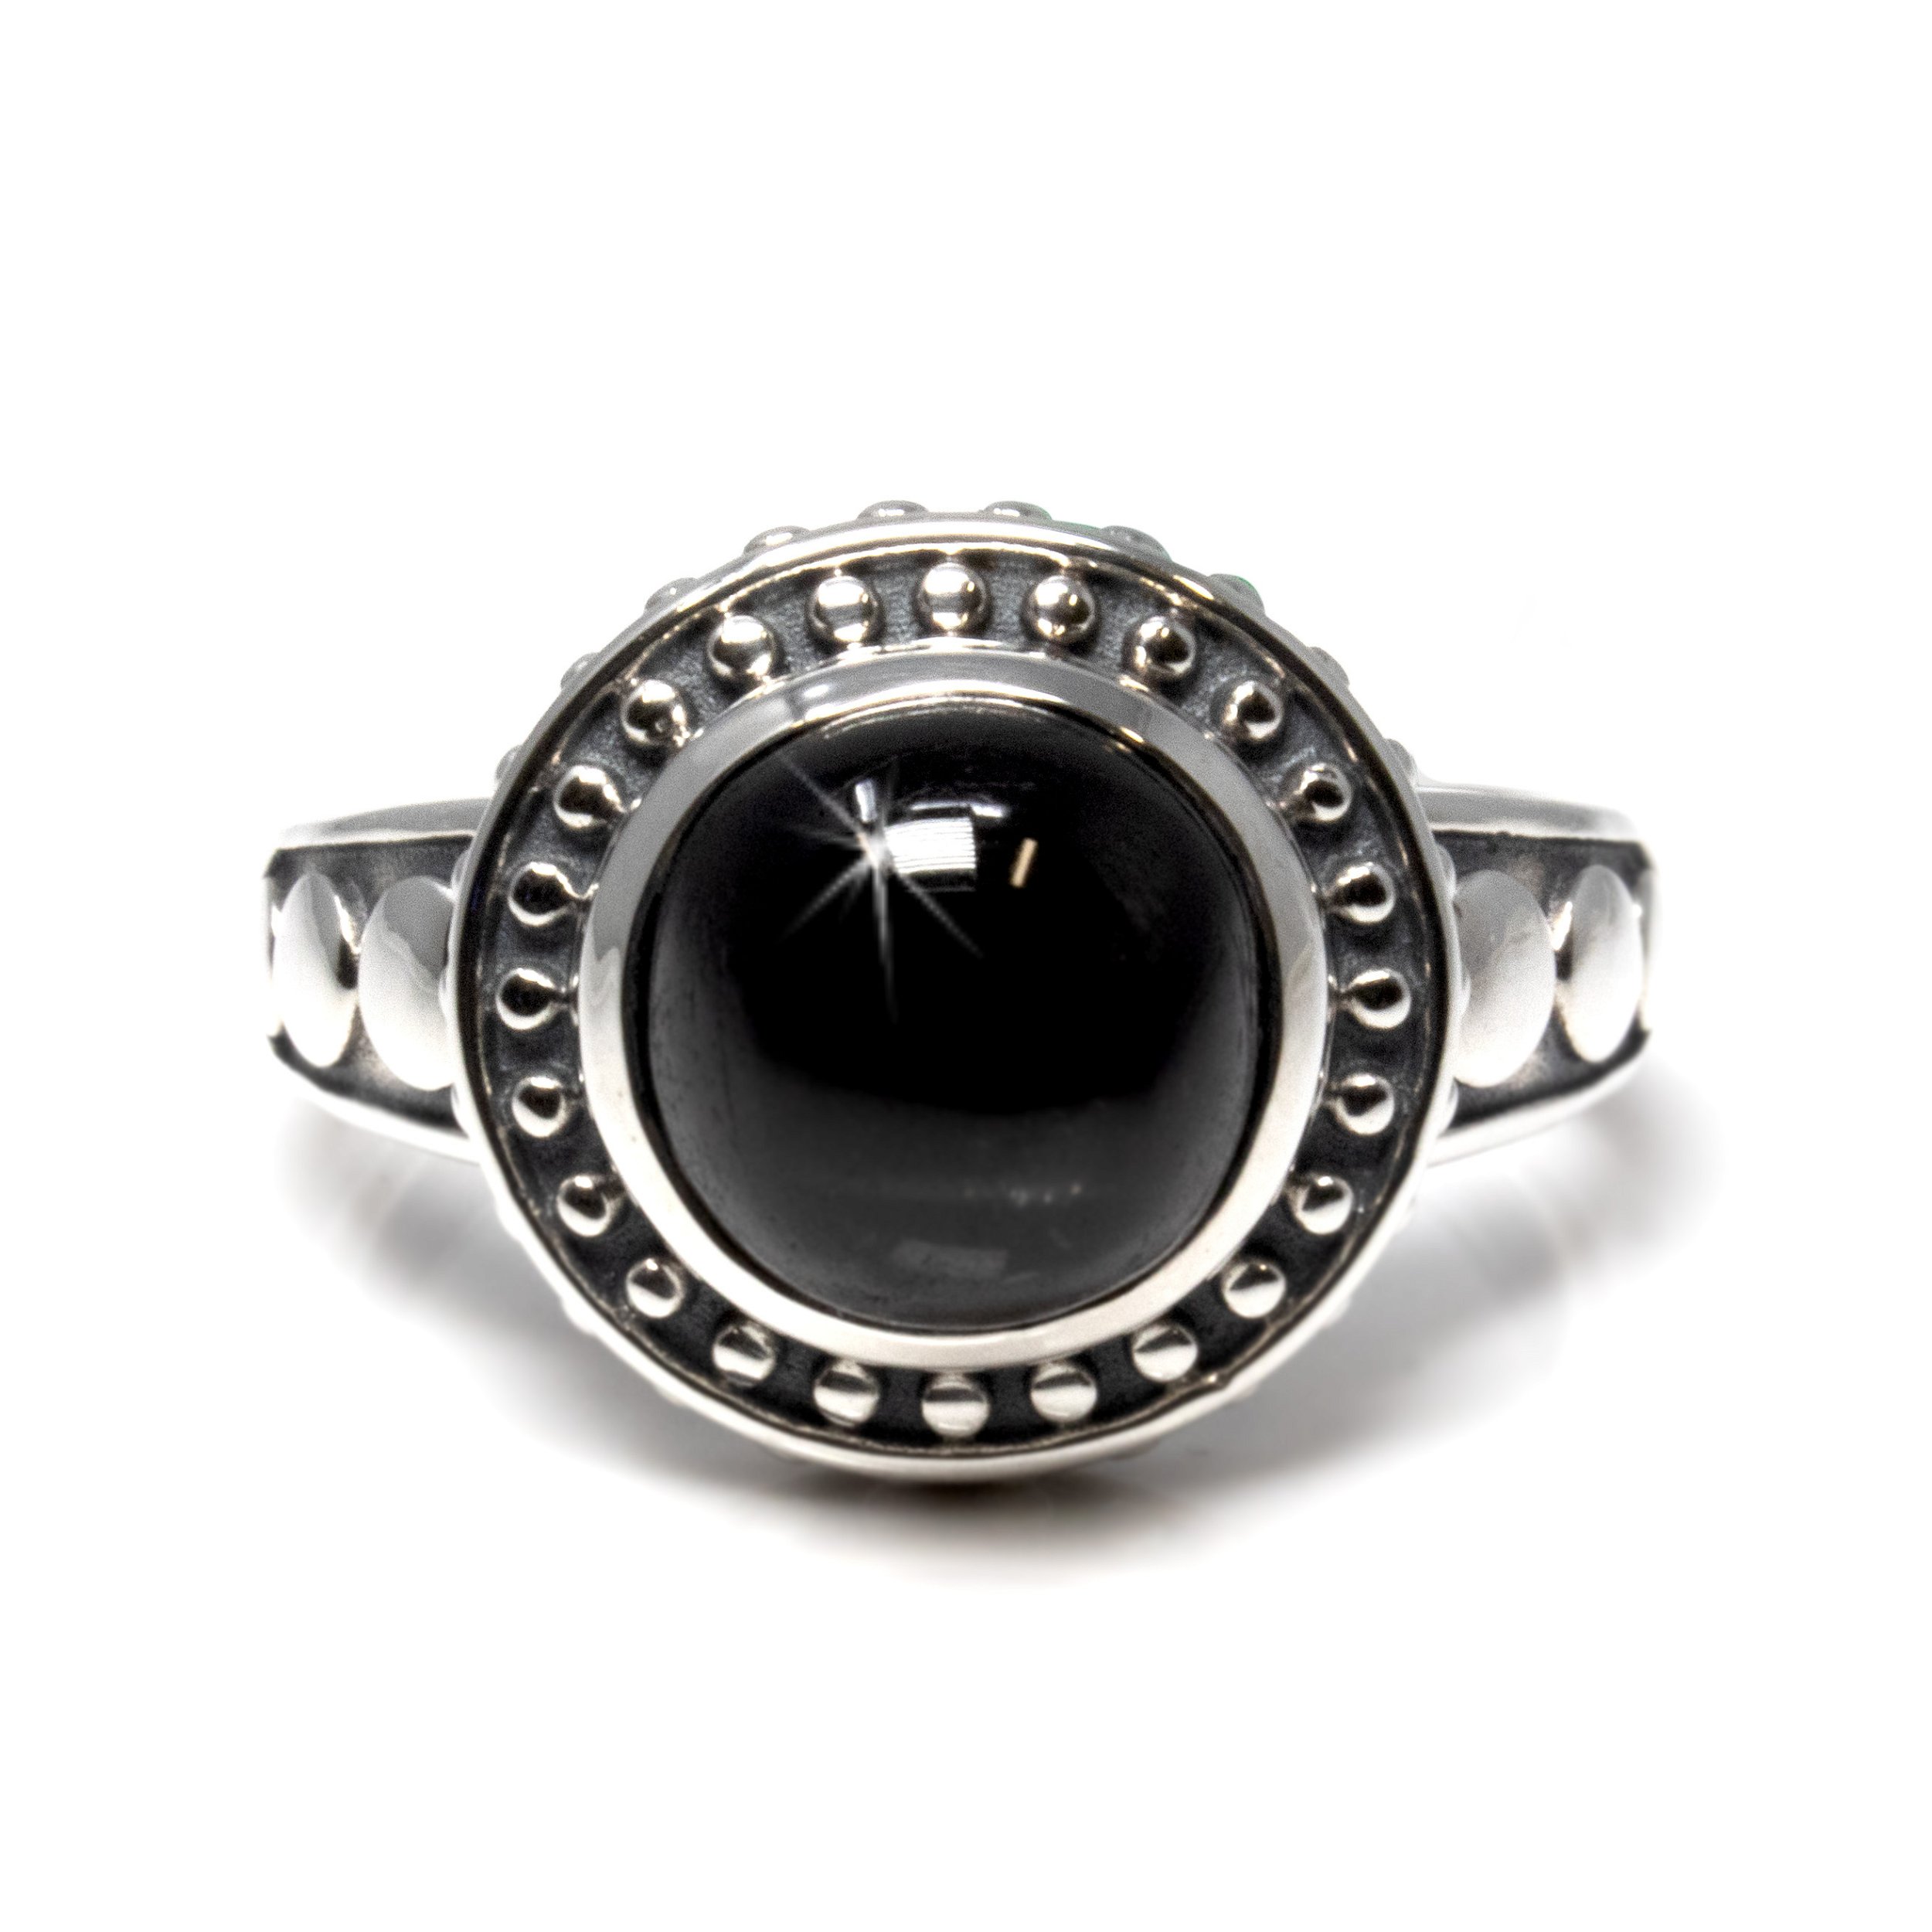 Black Star Garnet Ring - Round Cabochon Set On Ornate Silver Beaded Bezel With Antiqued Backing & Beading On Band Size 9